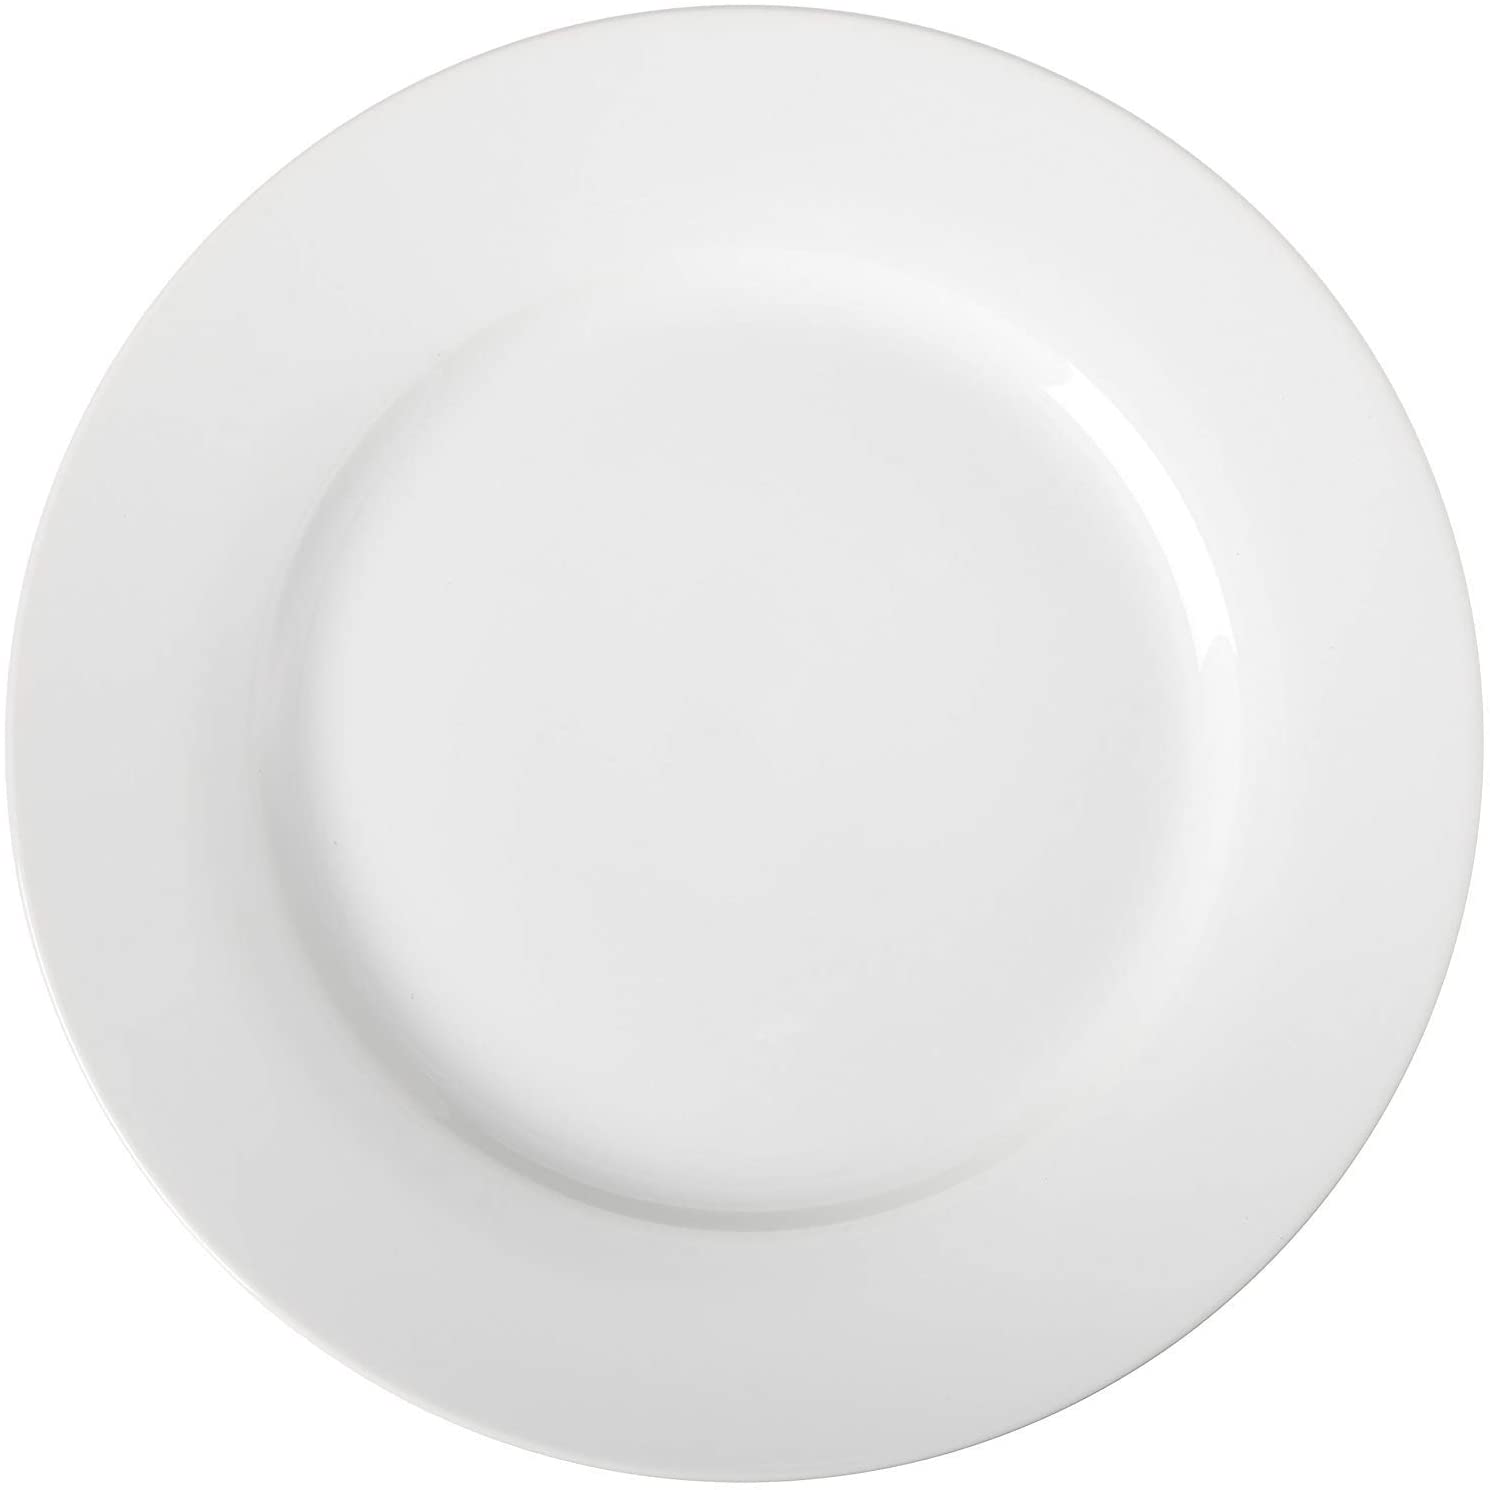 AmazonBasics Amazon Basics Dinner plate service 10.5 inches - 6 pieces